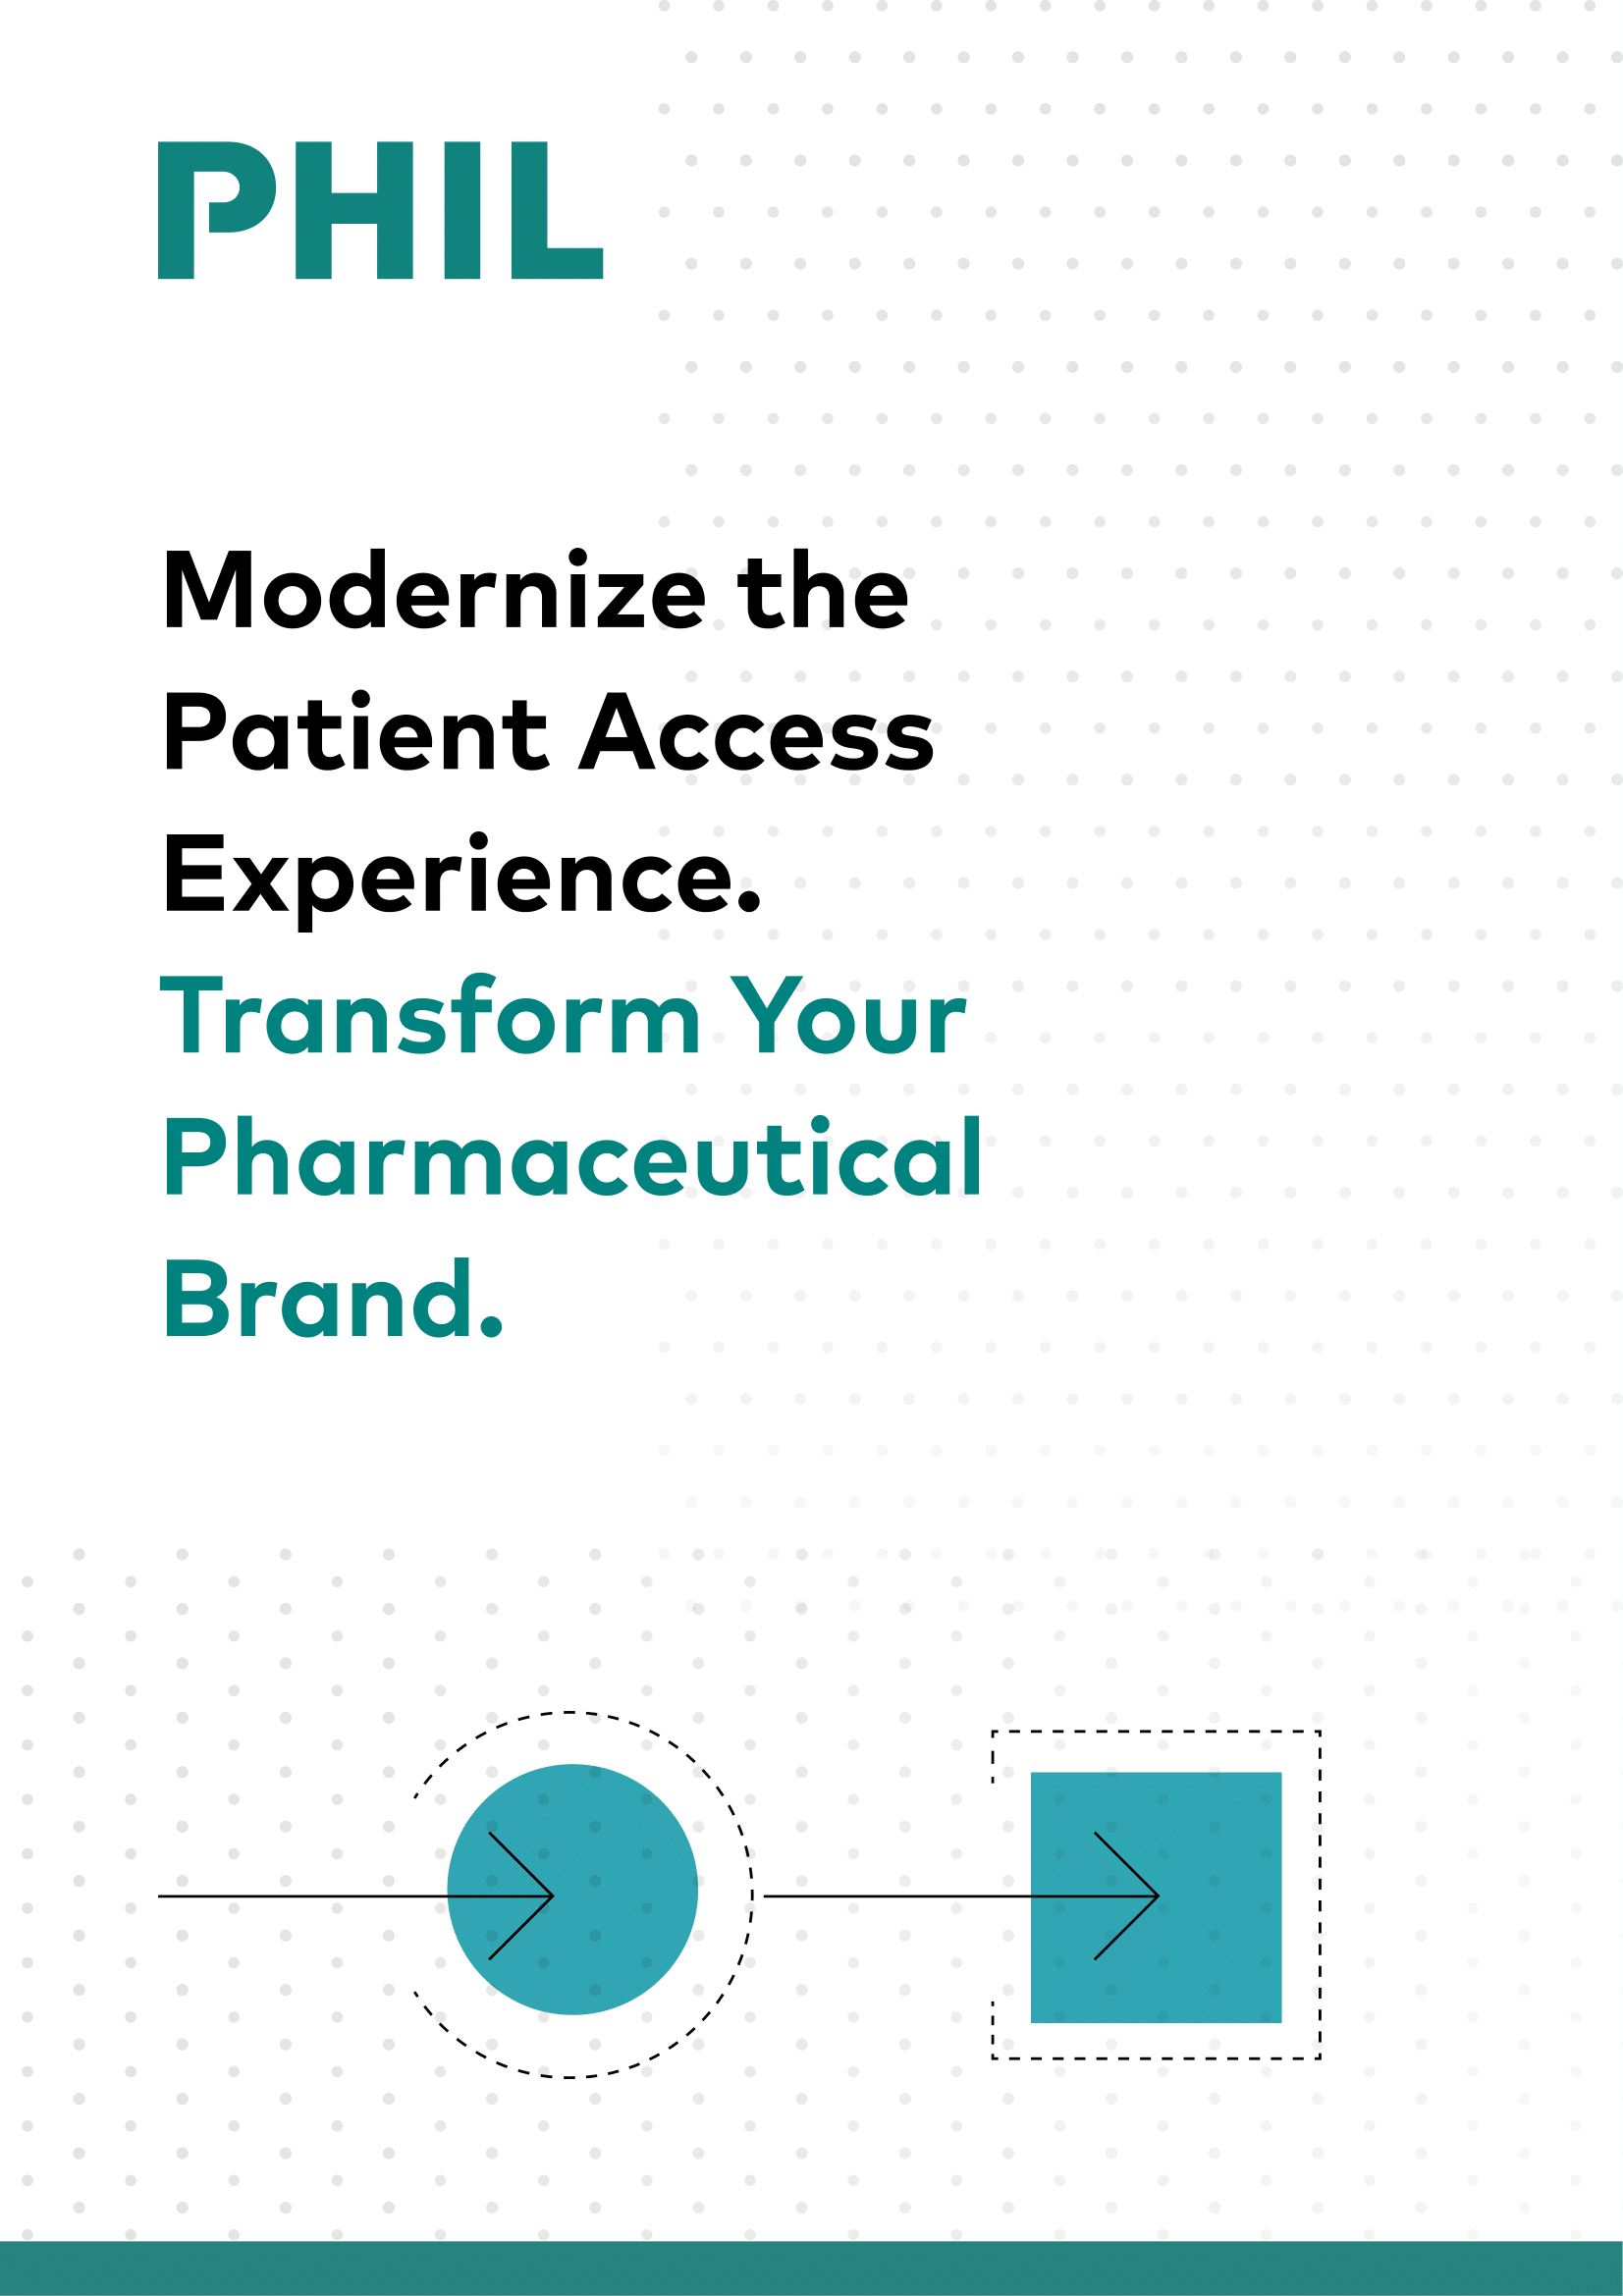 Phil Inc - Modernize the Patient Access Experience - White Paper -01